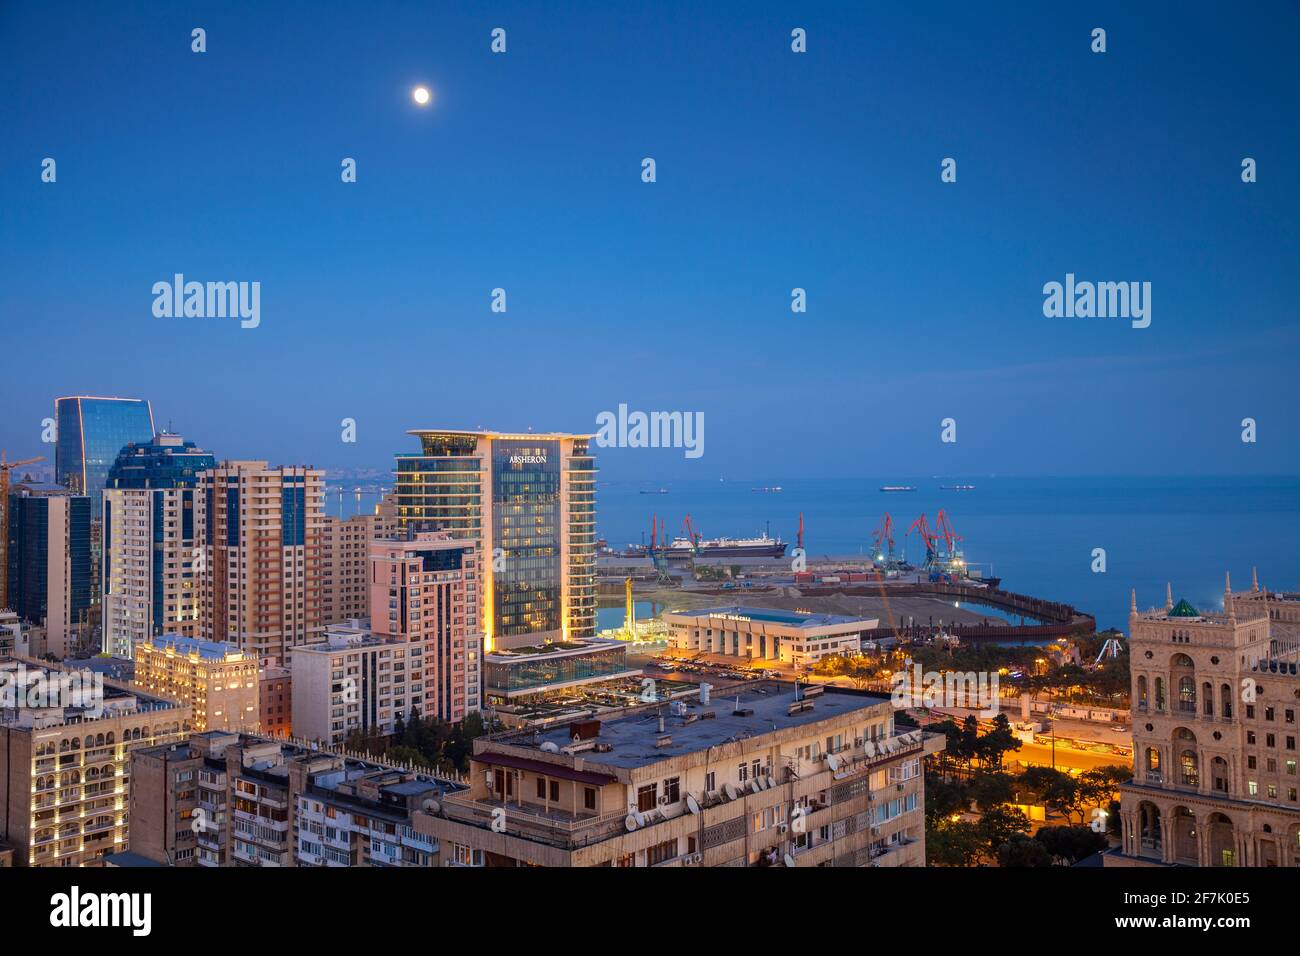 Azerbaijan, Baku, View of City looking towards JW Marriott Hotel Absheron Baku and Baku Port Stock Photo